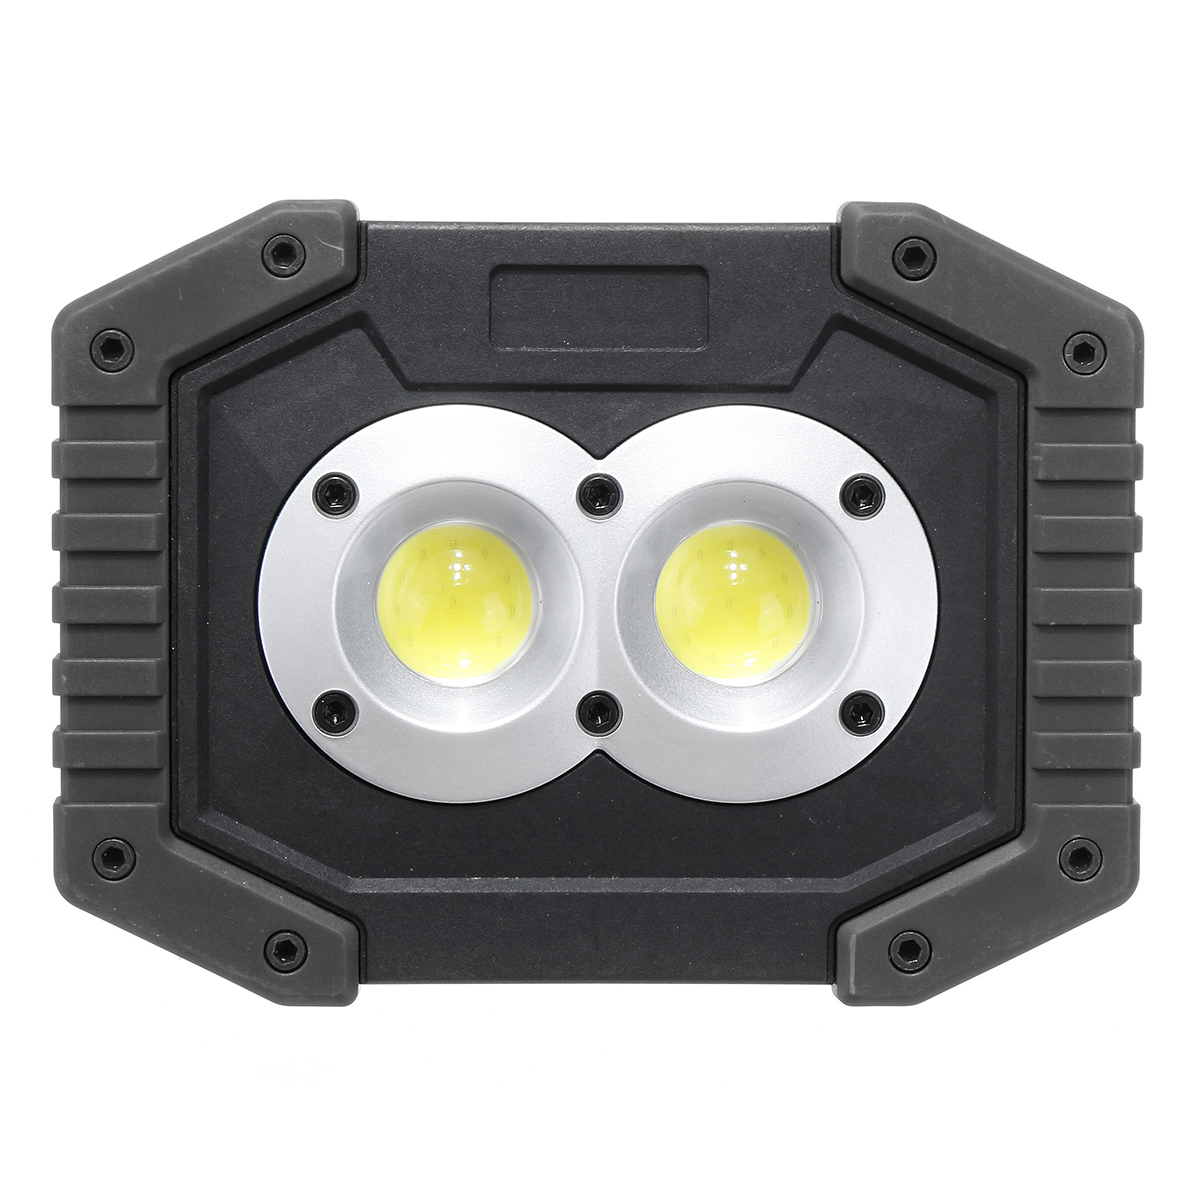 

Xmund 2Pcs 30W LED COB Work Light Portable 3 Modes USB Rechargeable Camping Light Flashlight Spotlight Searchlight Black